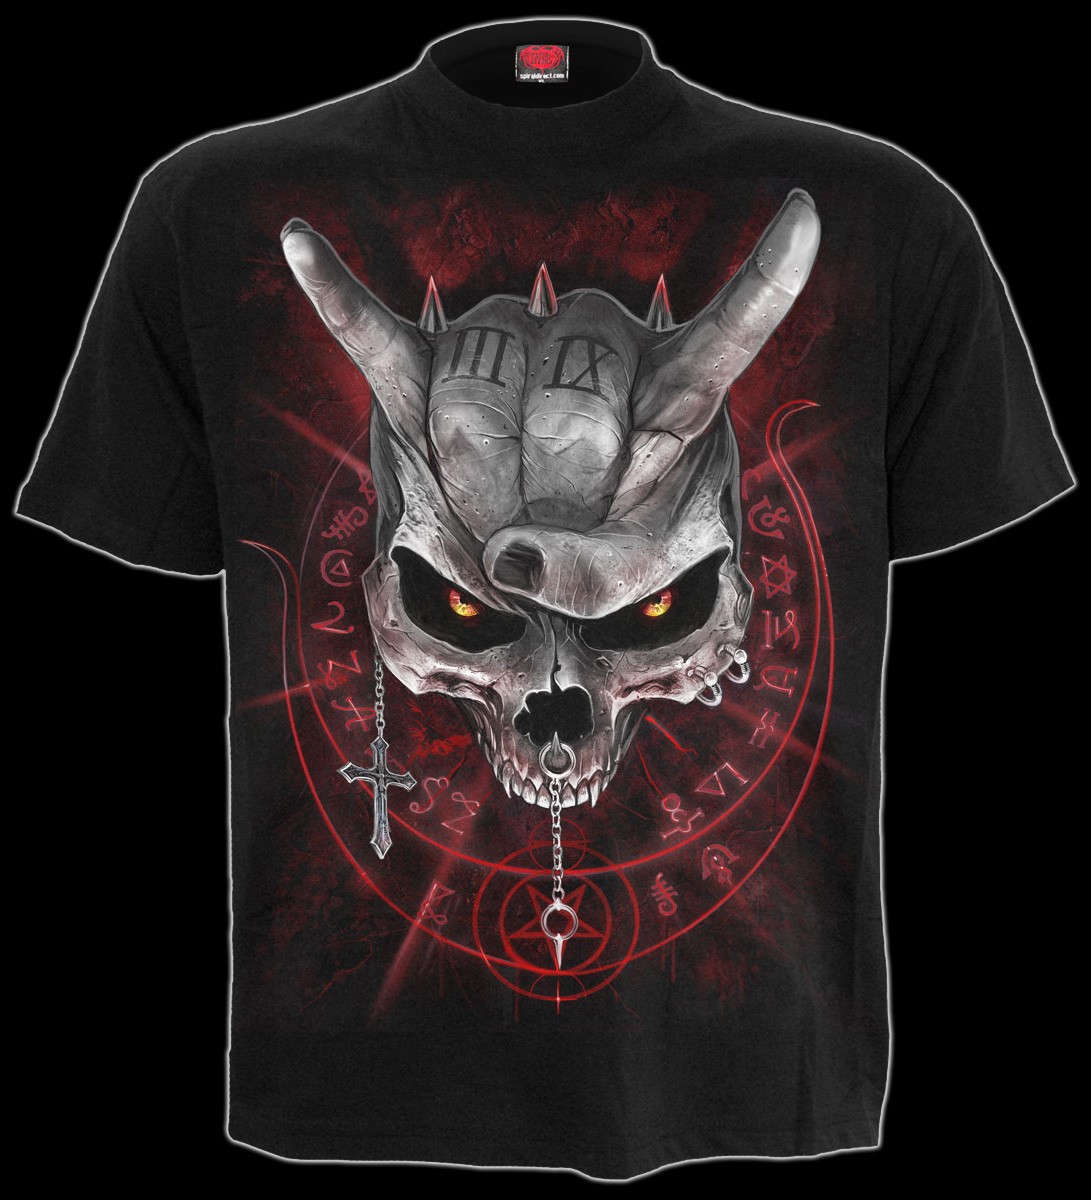 Never Too Loud - Spiral Skull T-Shirt